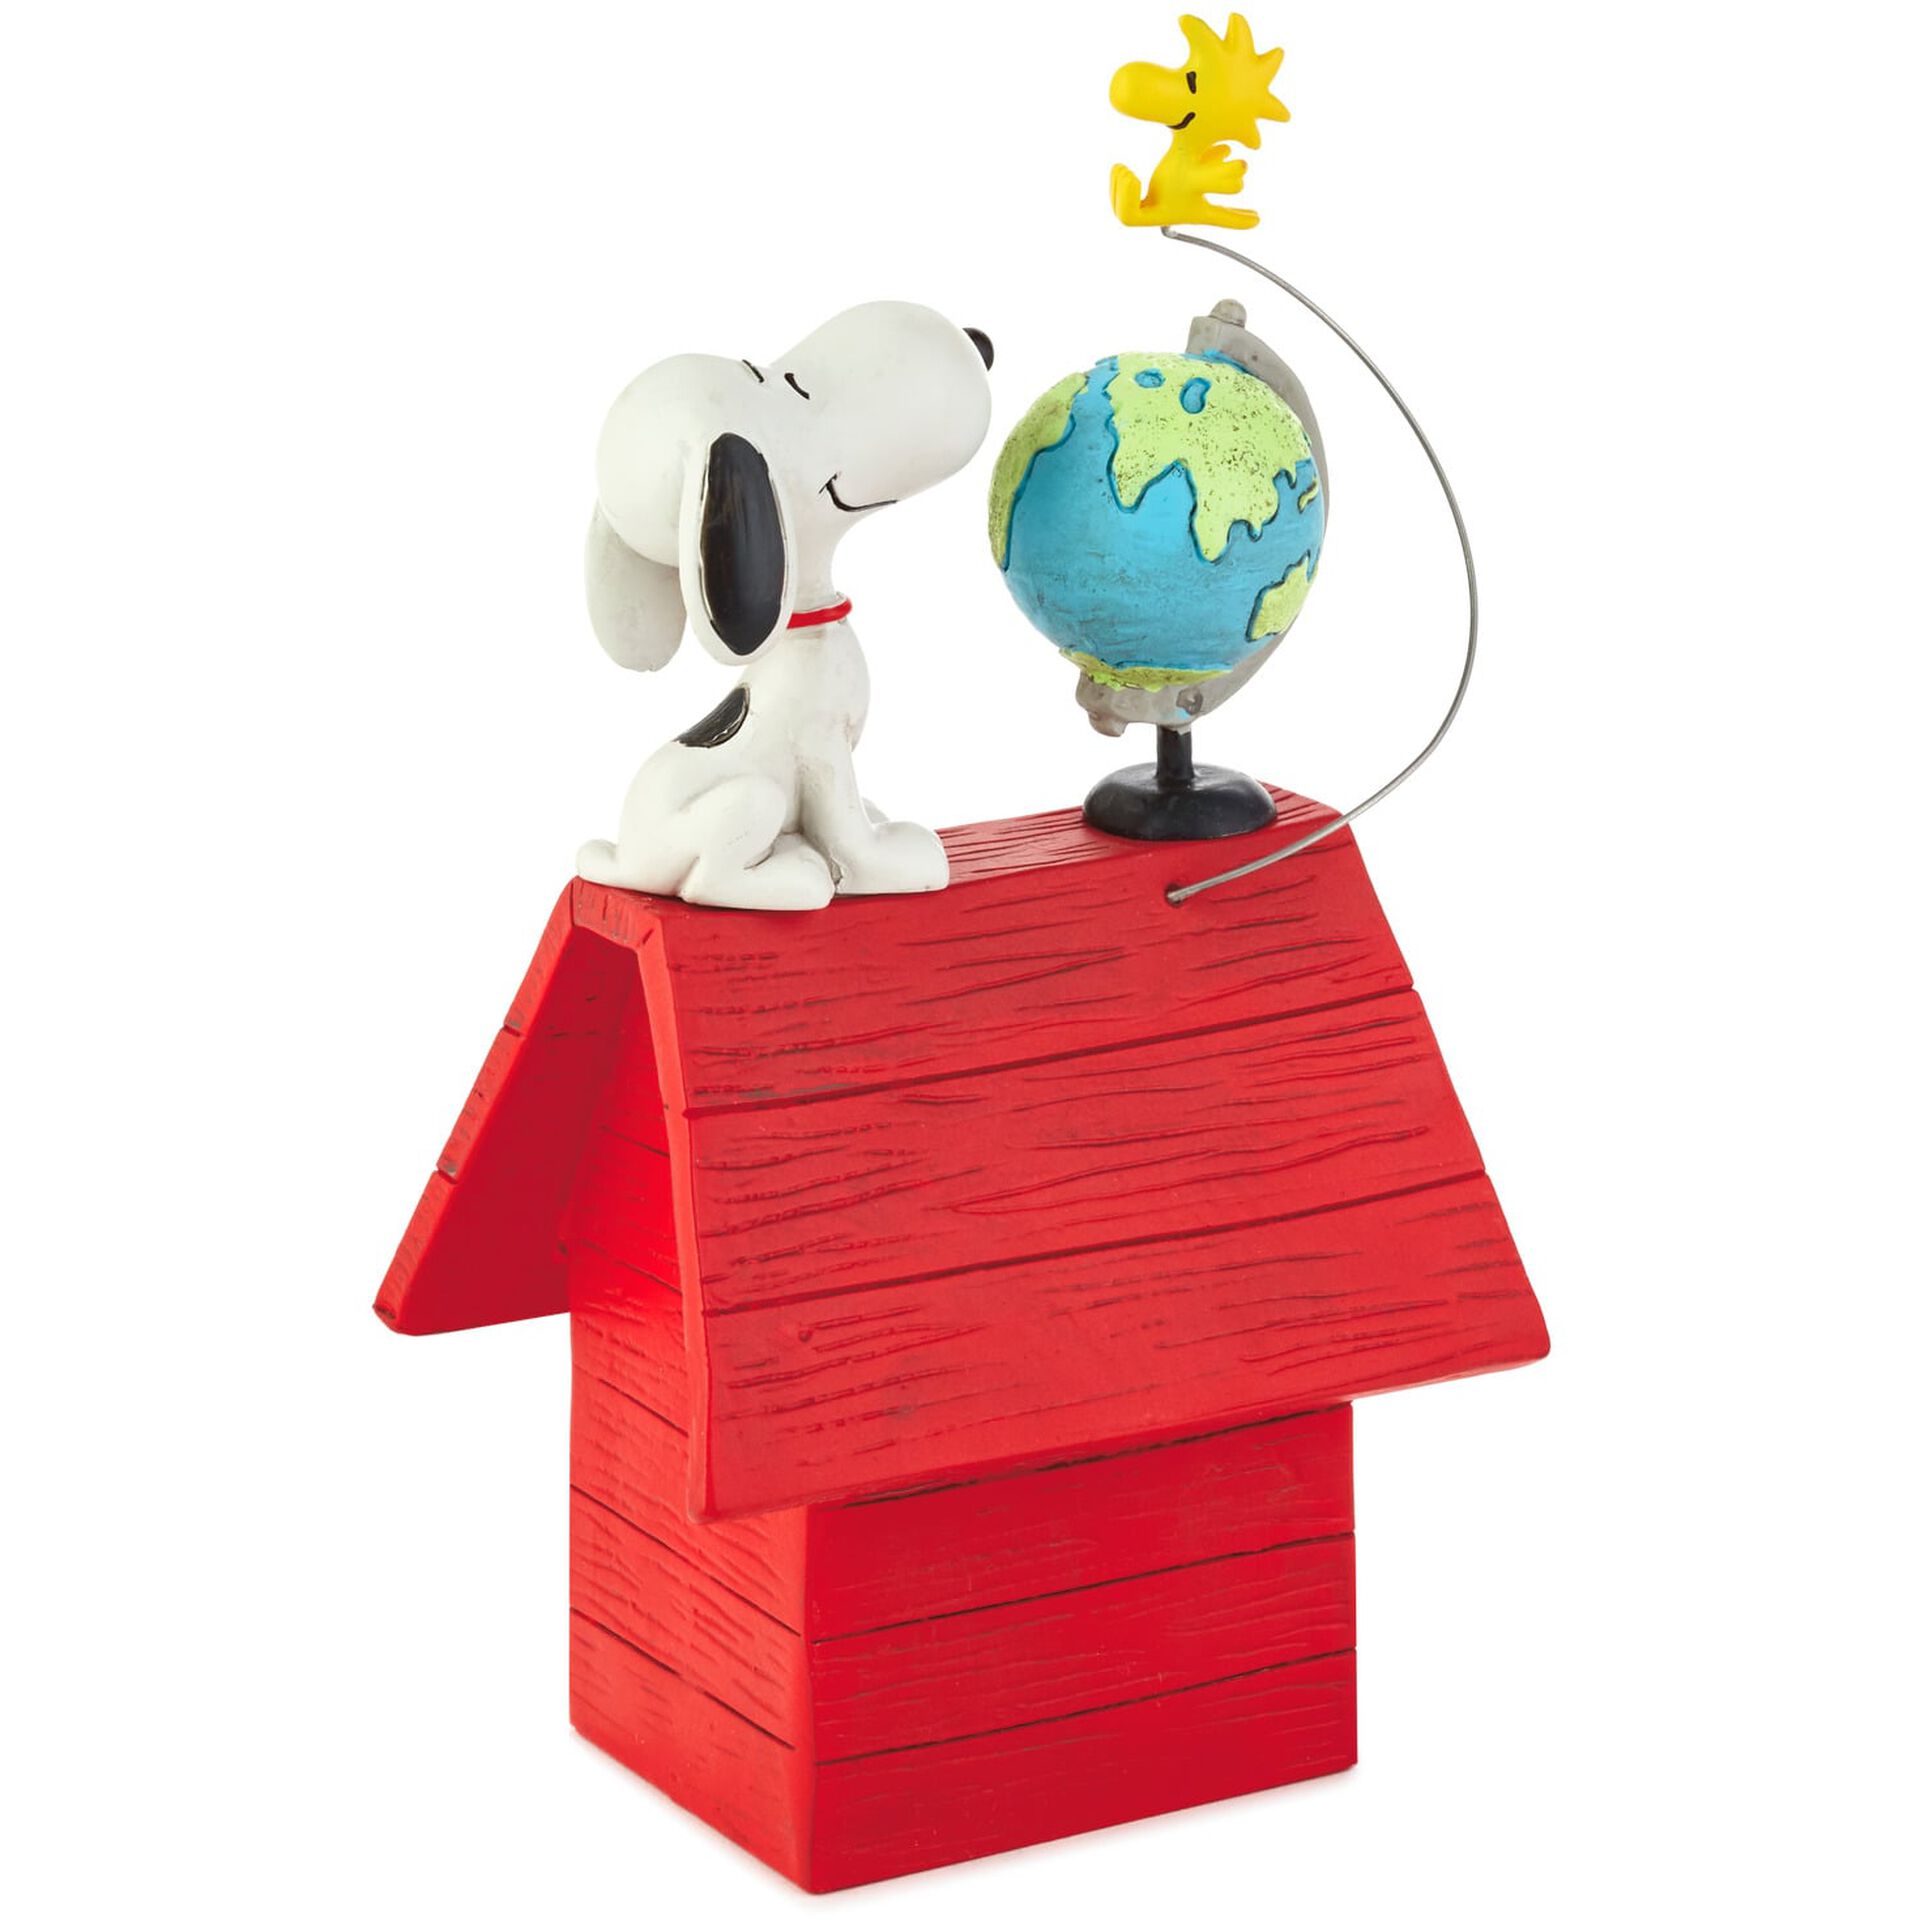 Peanuts Snoopy And Woodstock Friends Make The World Better Figurine 6 Figurines Hallmark